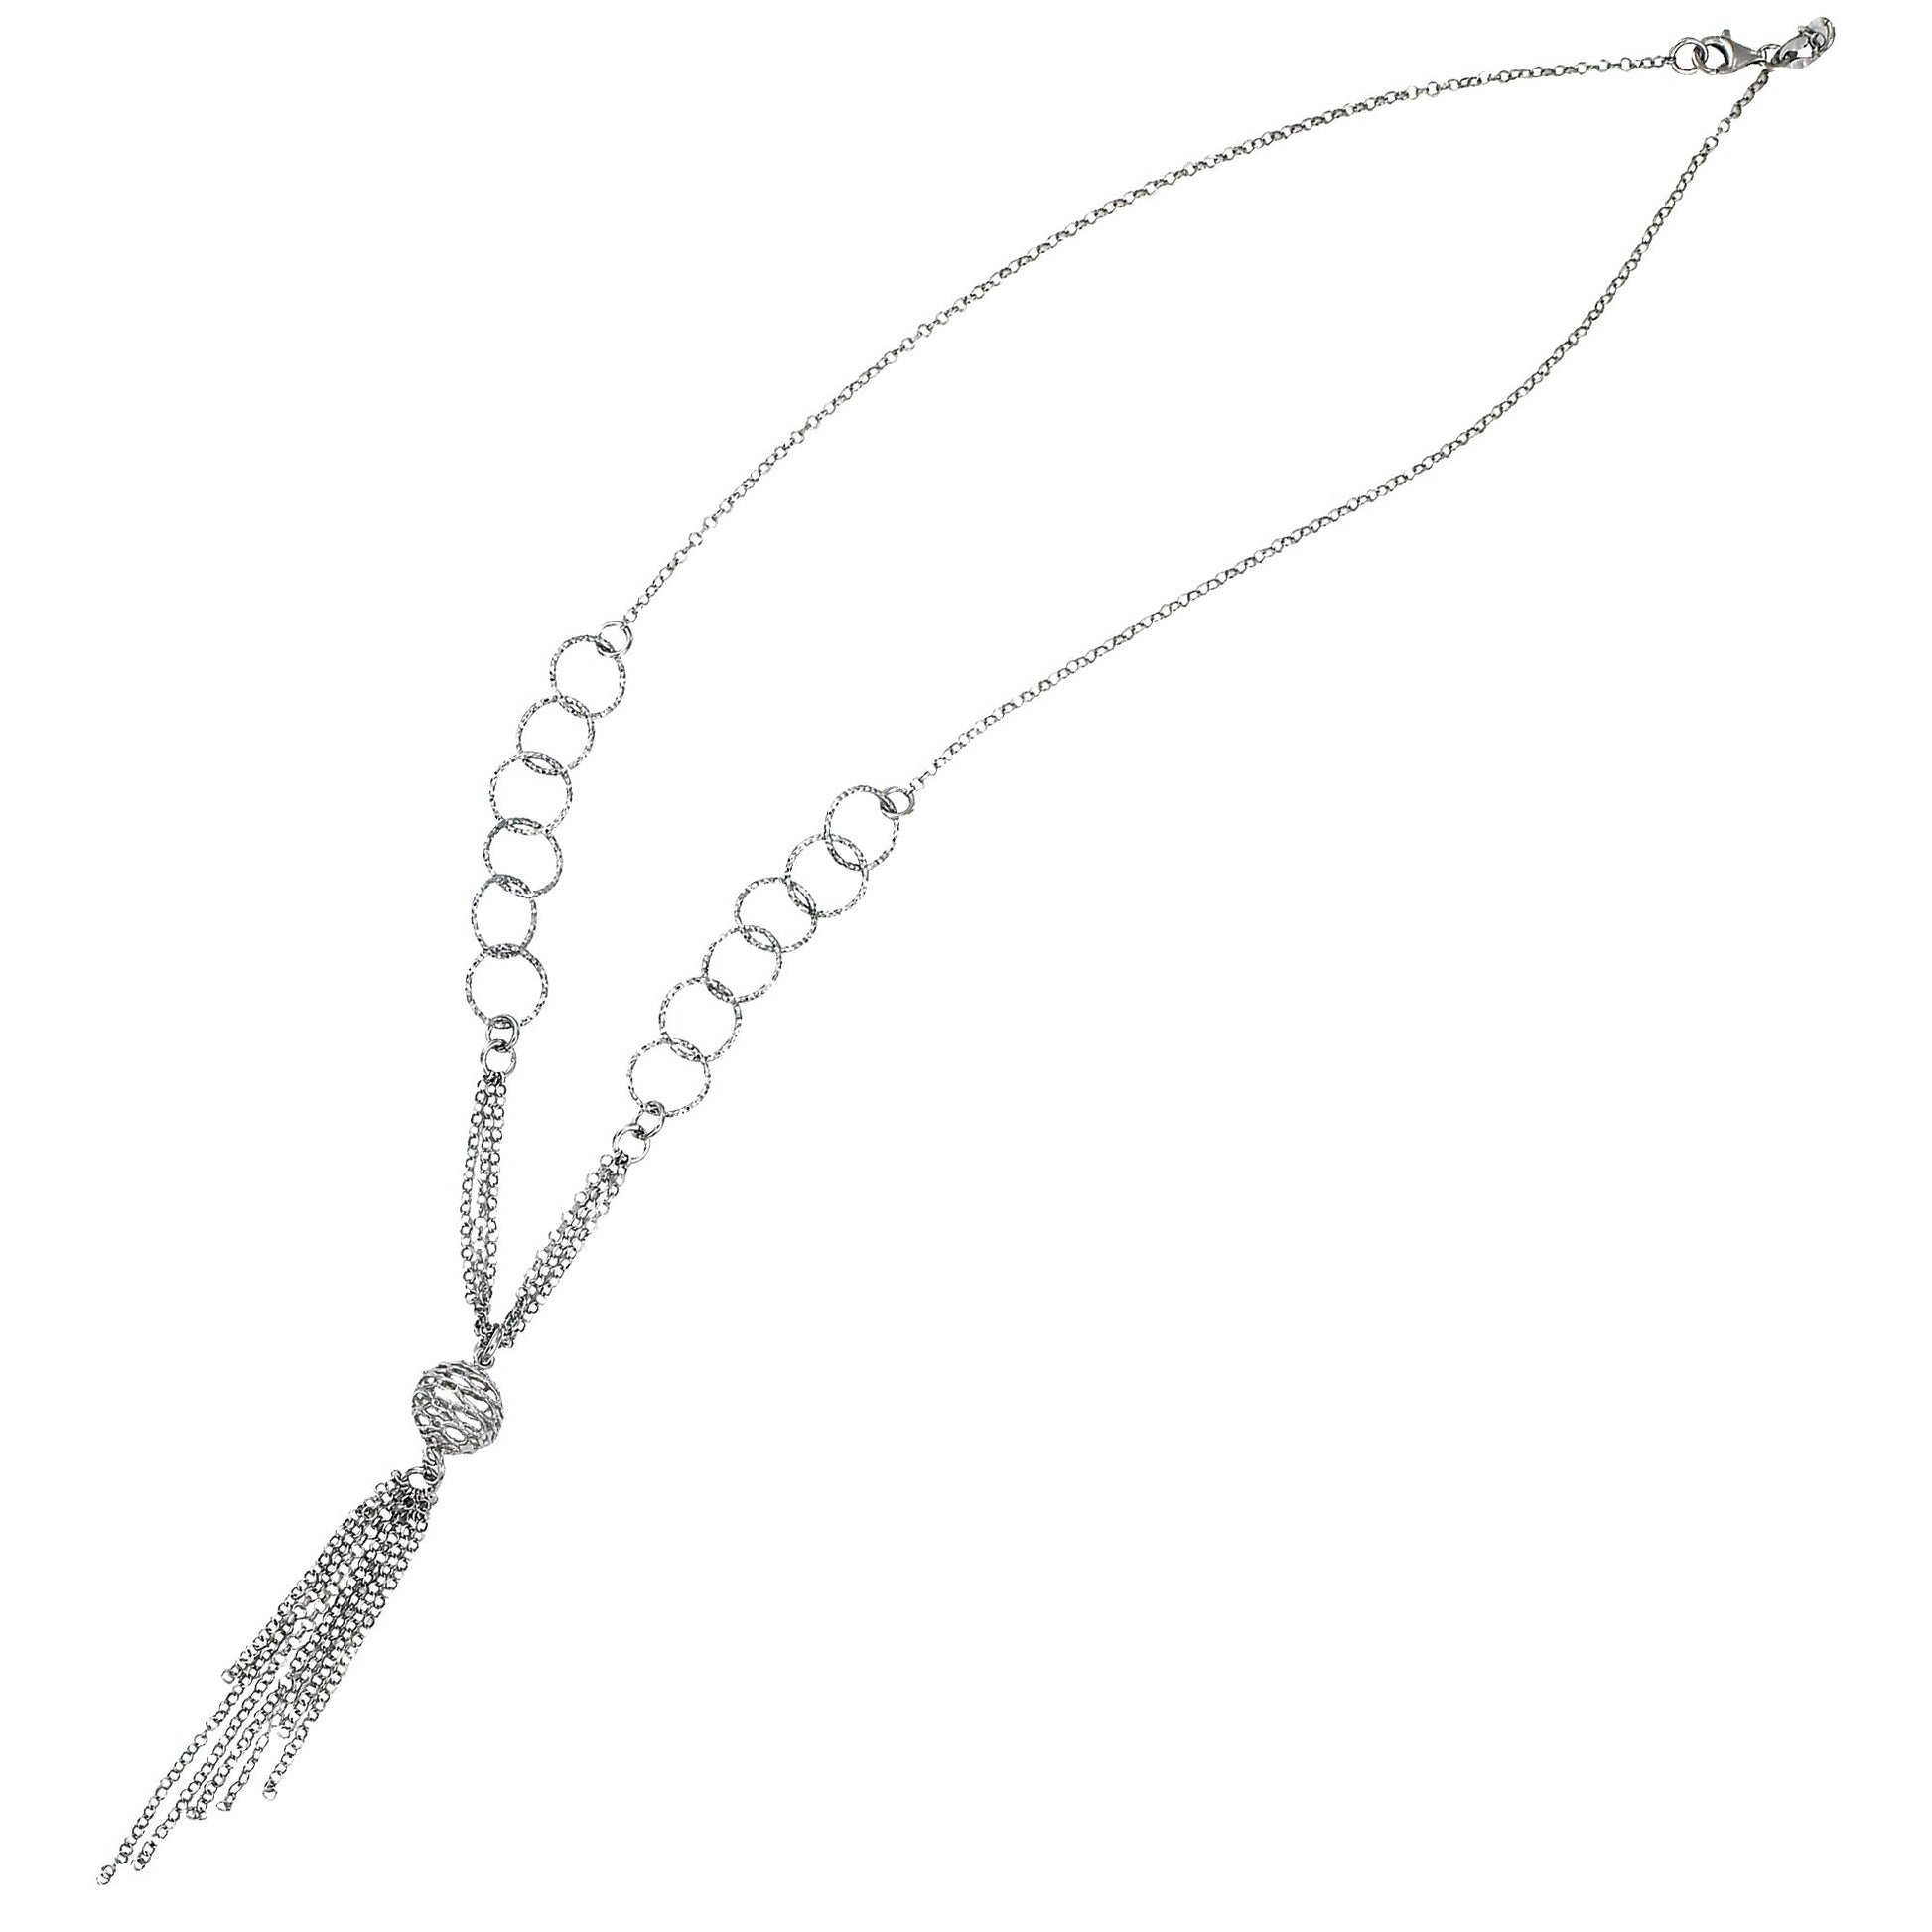 Franco Stellari Italian Sterling Silver Circles & Tassel Necklace, 20"